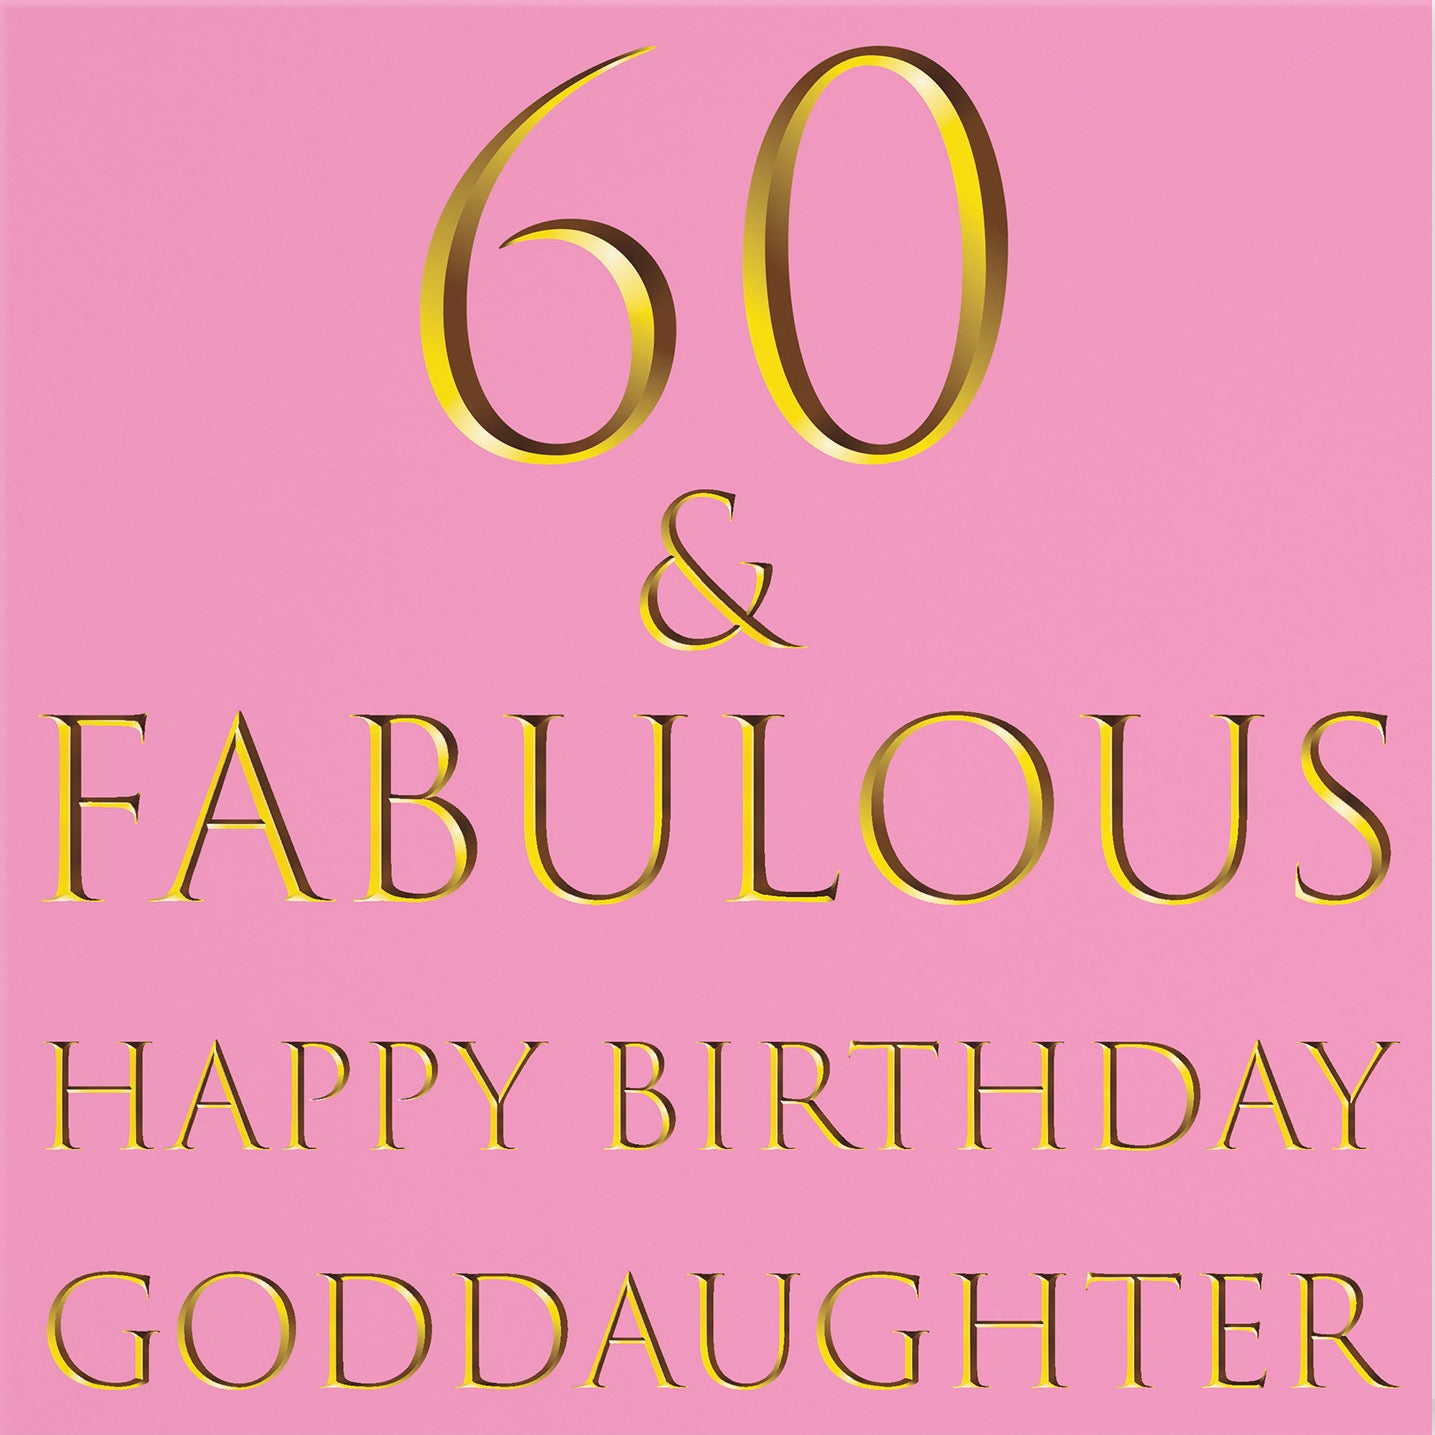 60th Goddaughter Birthday Card Still Totally Fabulous - Default Title (B08L23VMW1)